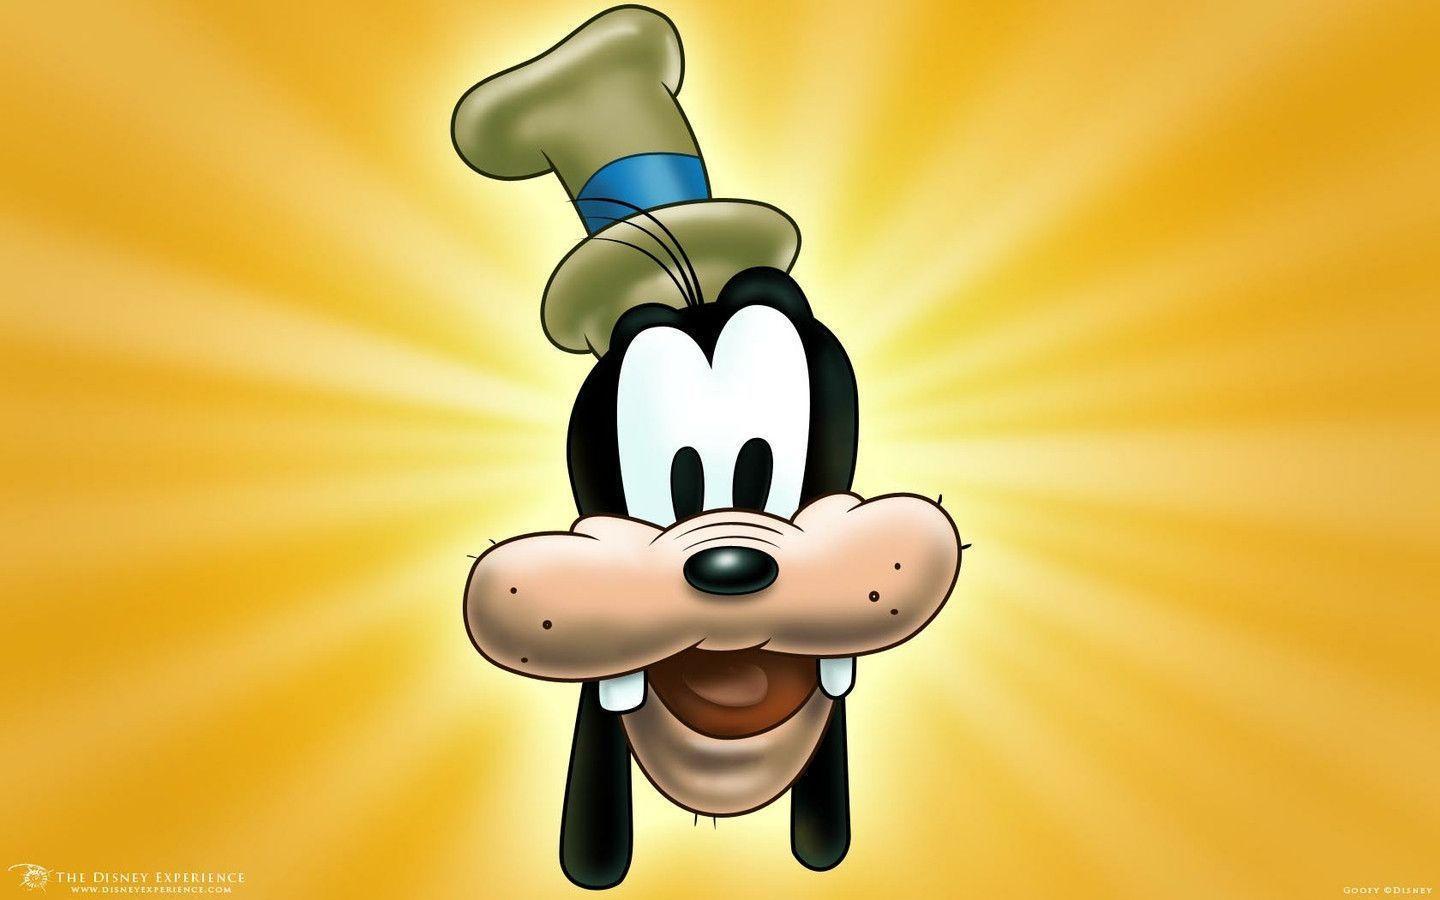 Pin by Lily Amaya on Fondos para tela  Disney characters goofy Goofy  disney Mickey mouse wallpaper